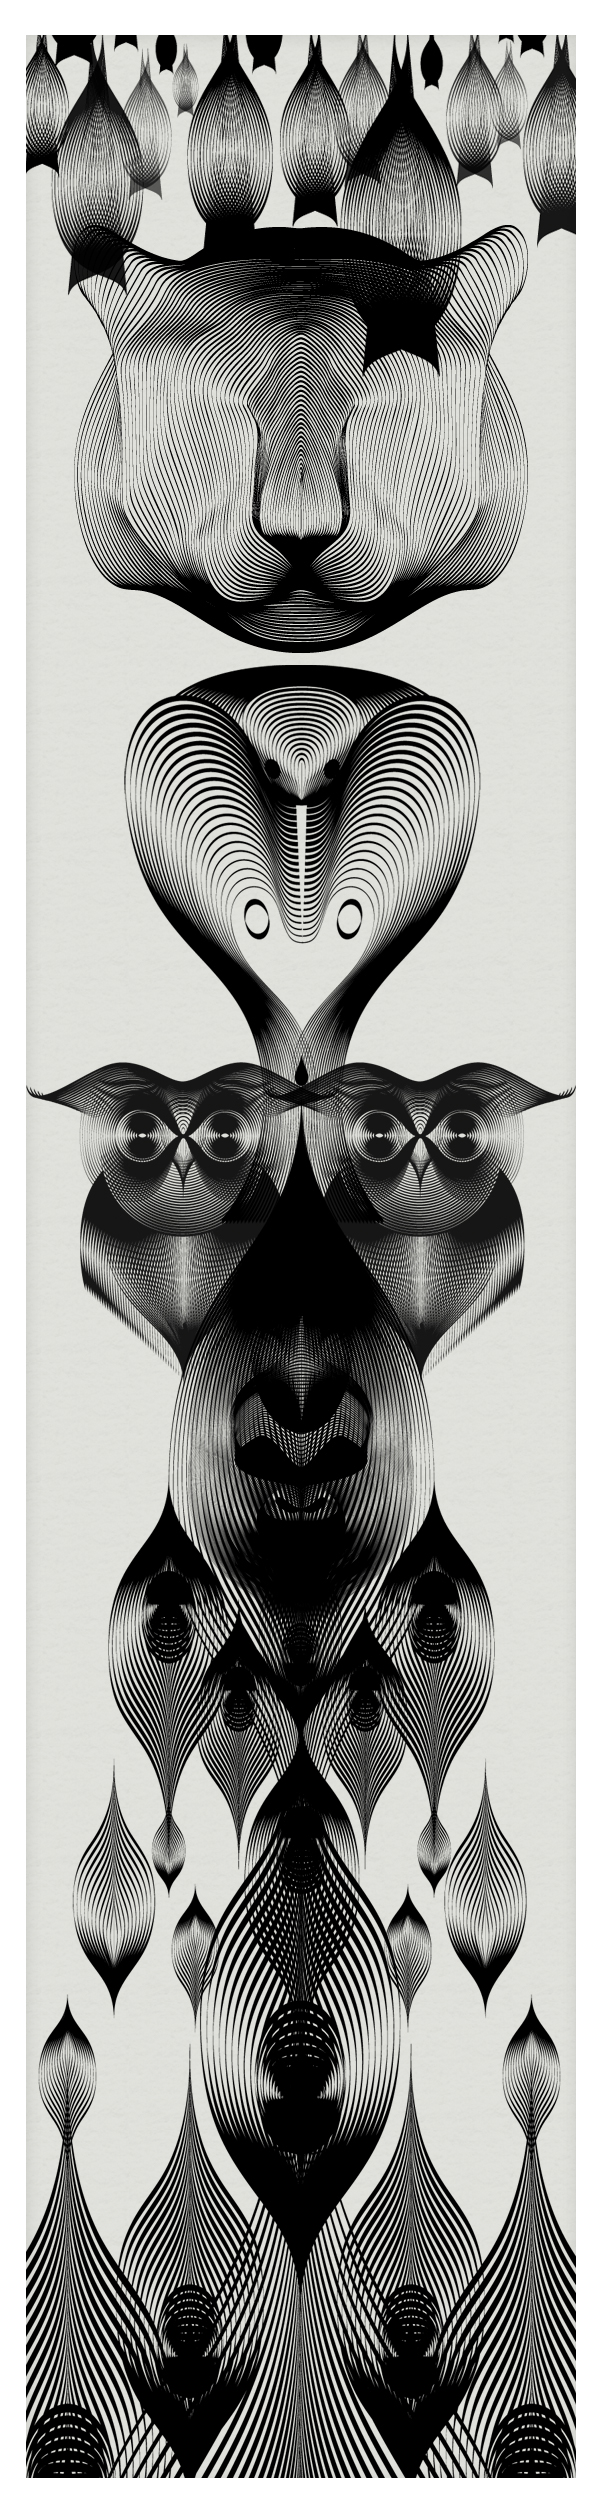 Adobe Portfolio cobra gorilla peacock moire puma bat owl Illustrator minimal blending